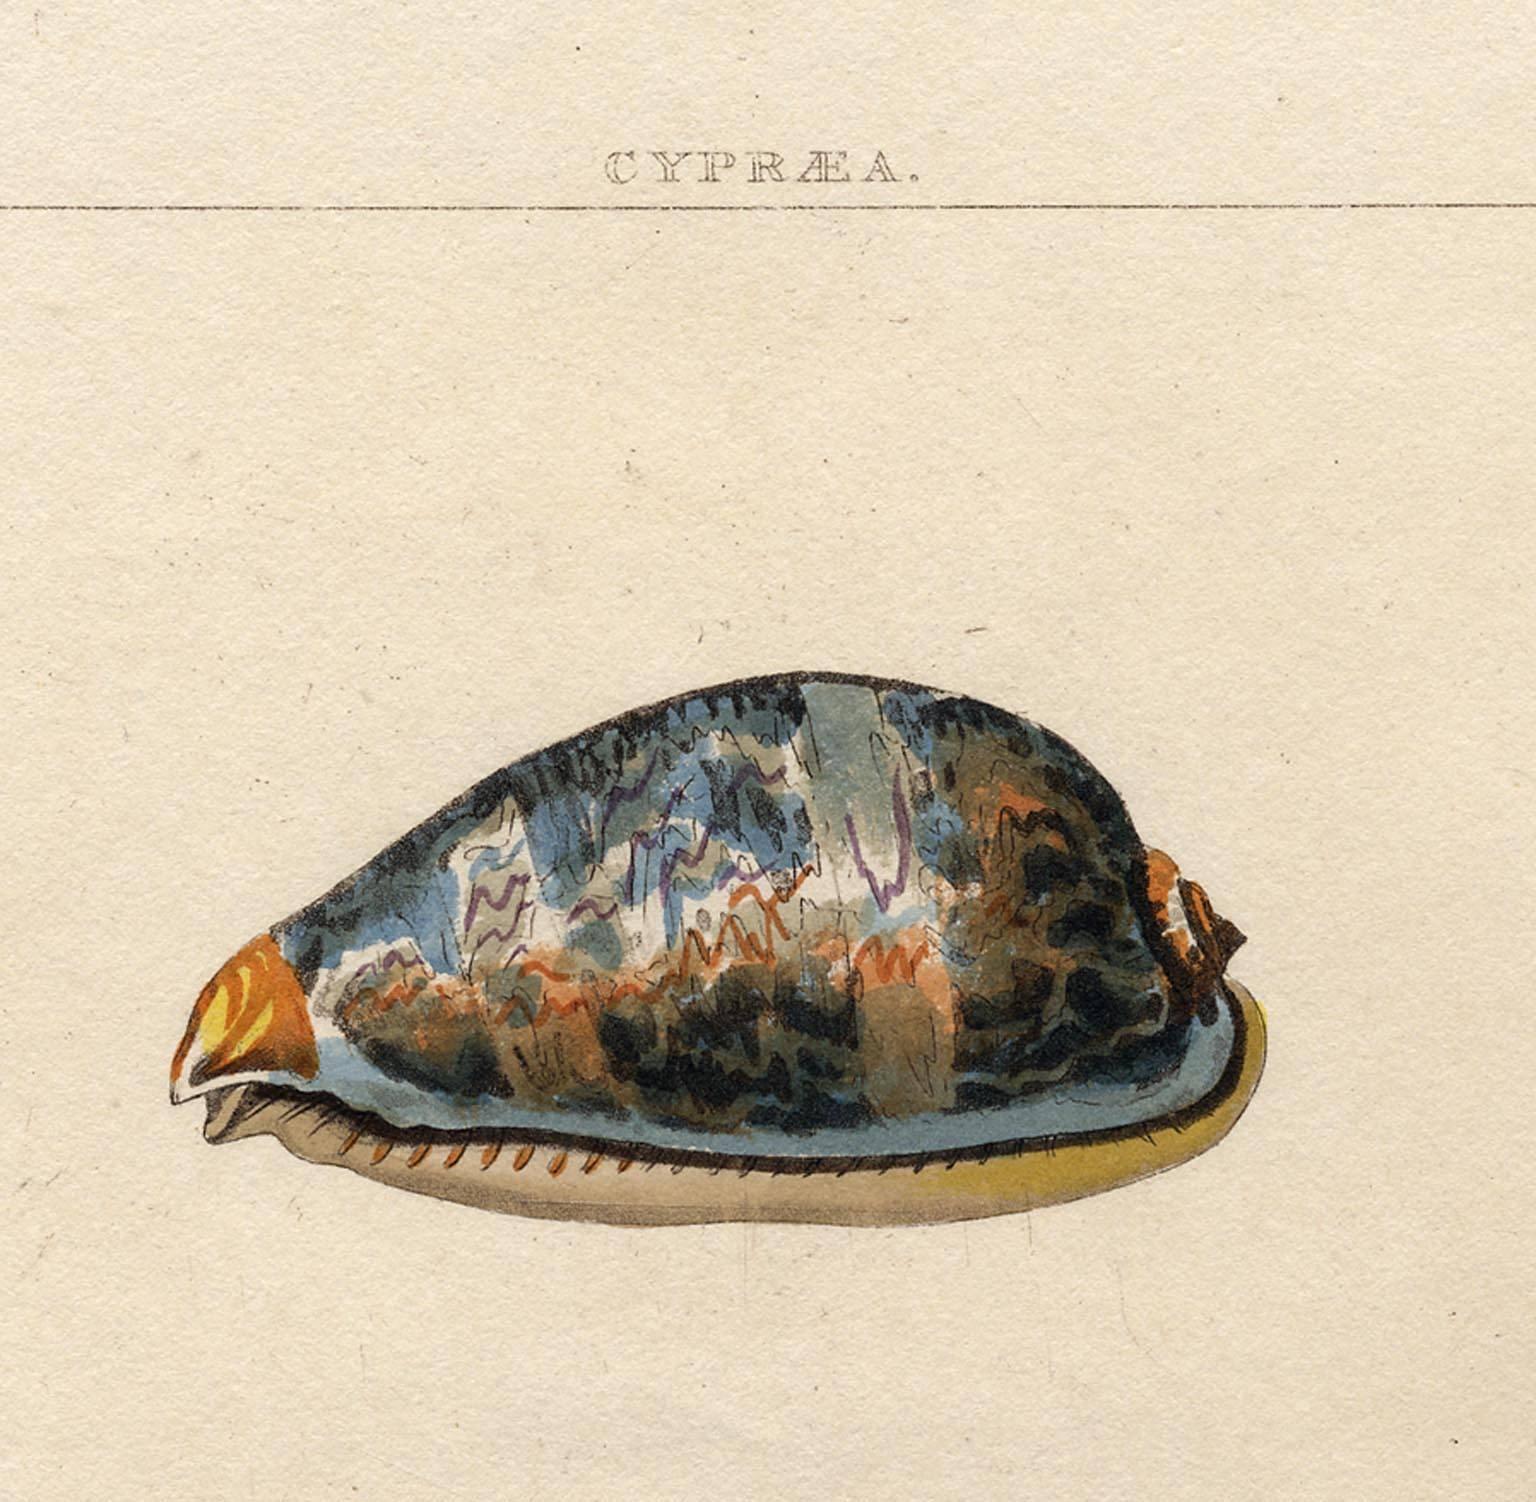 Cypraea.  Univalves. - Print by George Perry